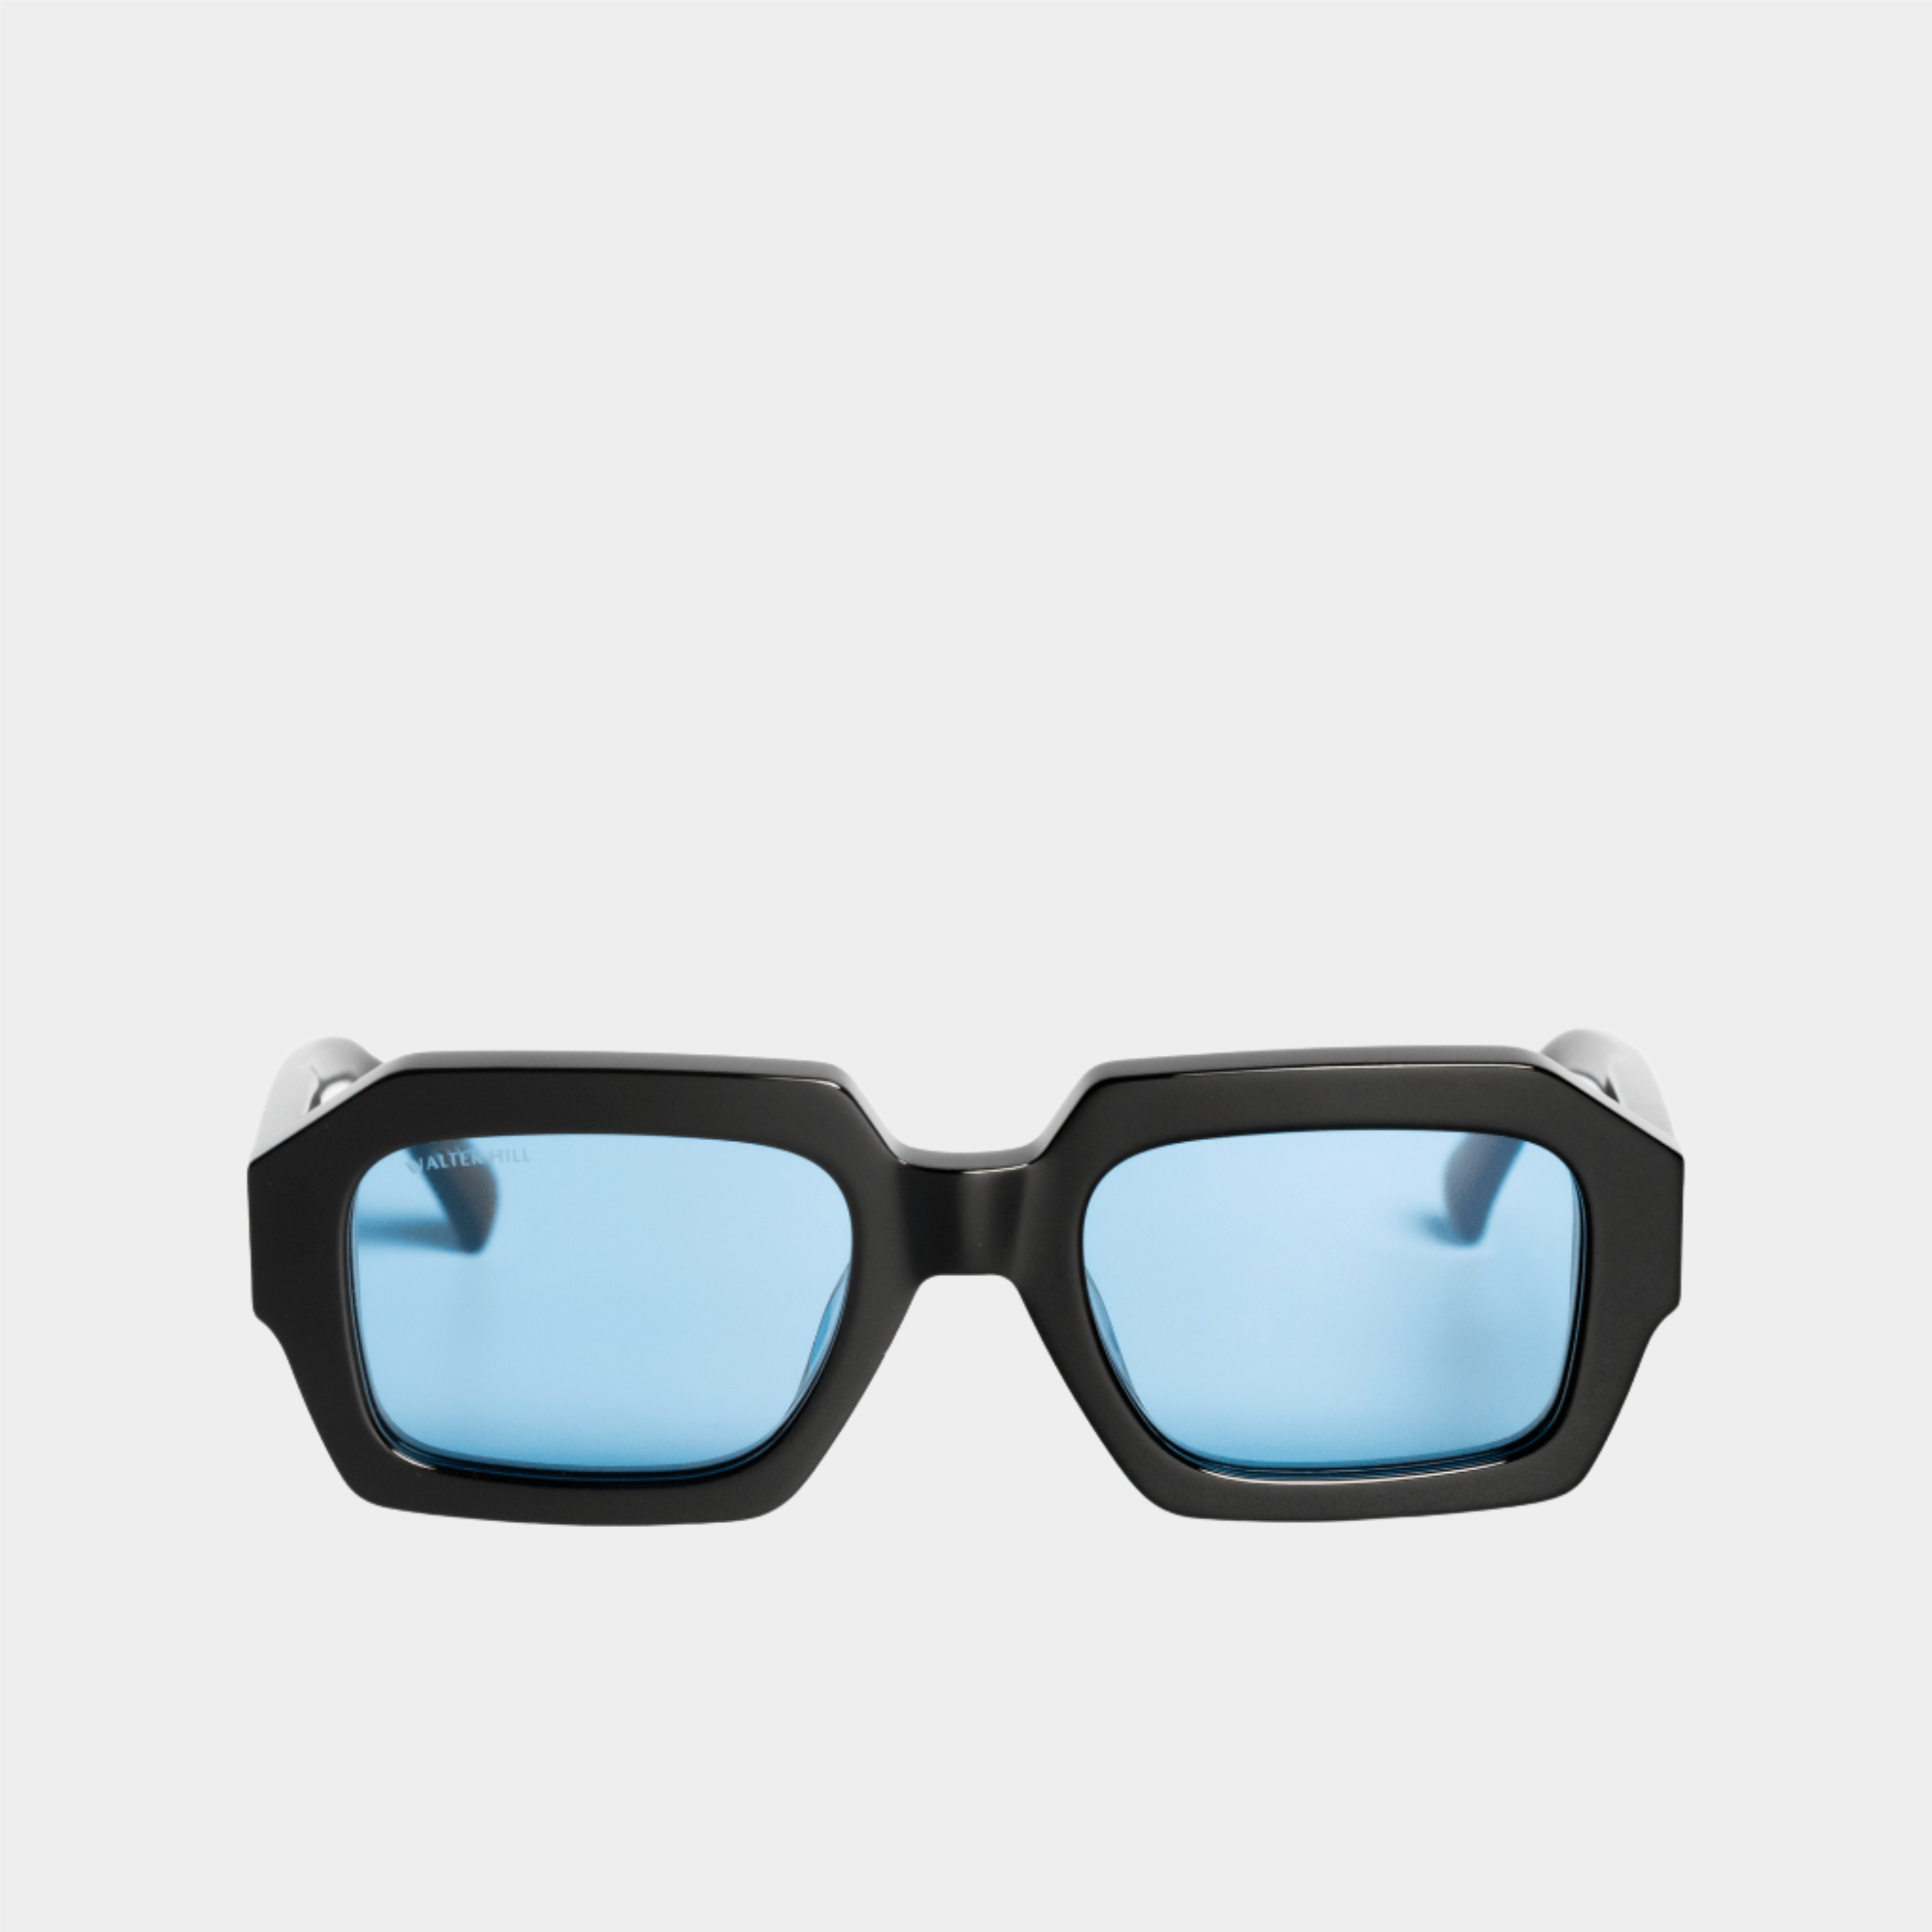 Walter Hill Sunglasses Black / Standard / Polarized Cat.3 LAYNE - Black - Blue